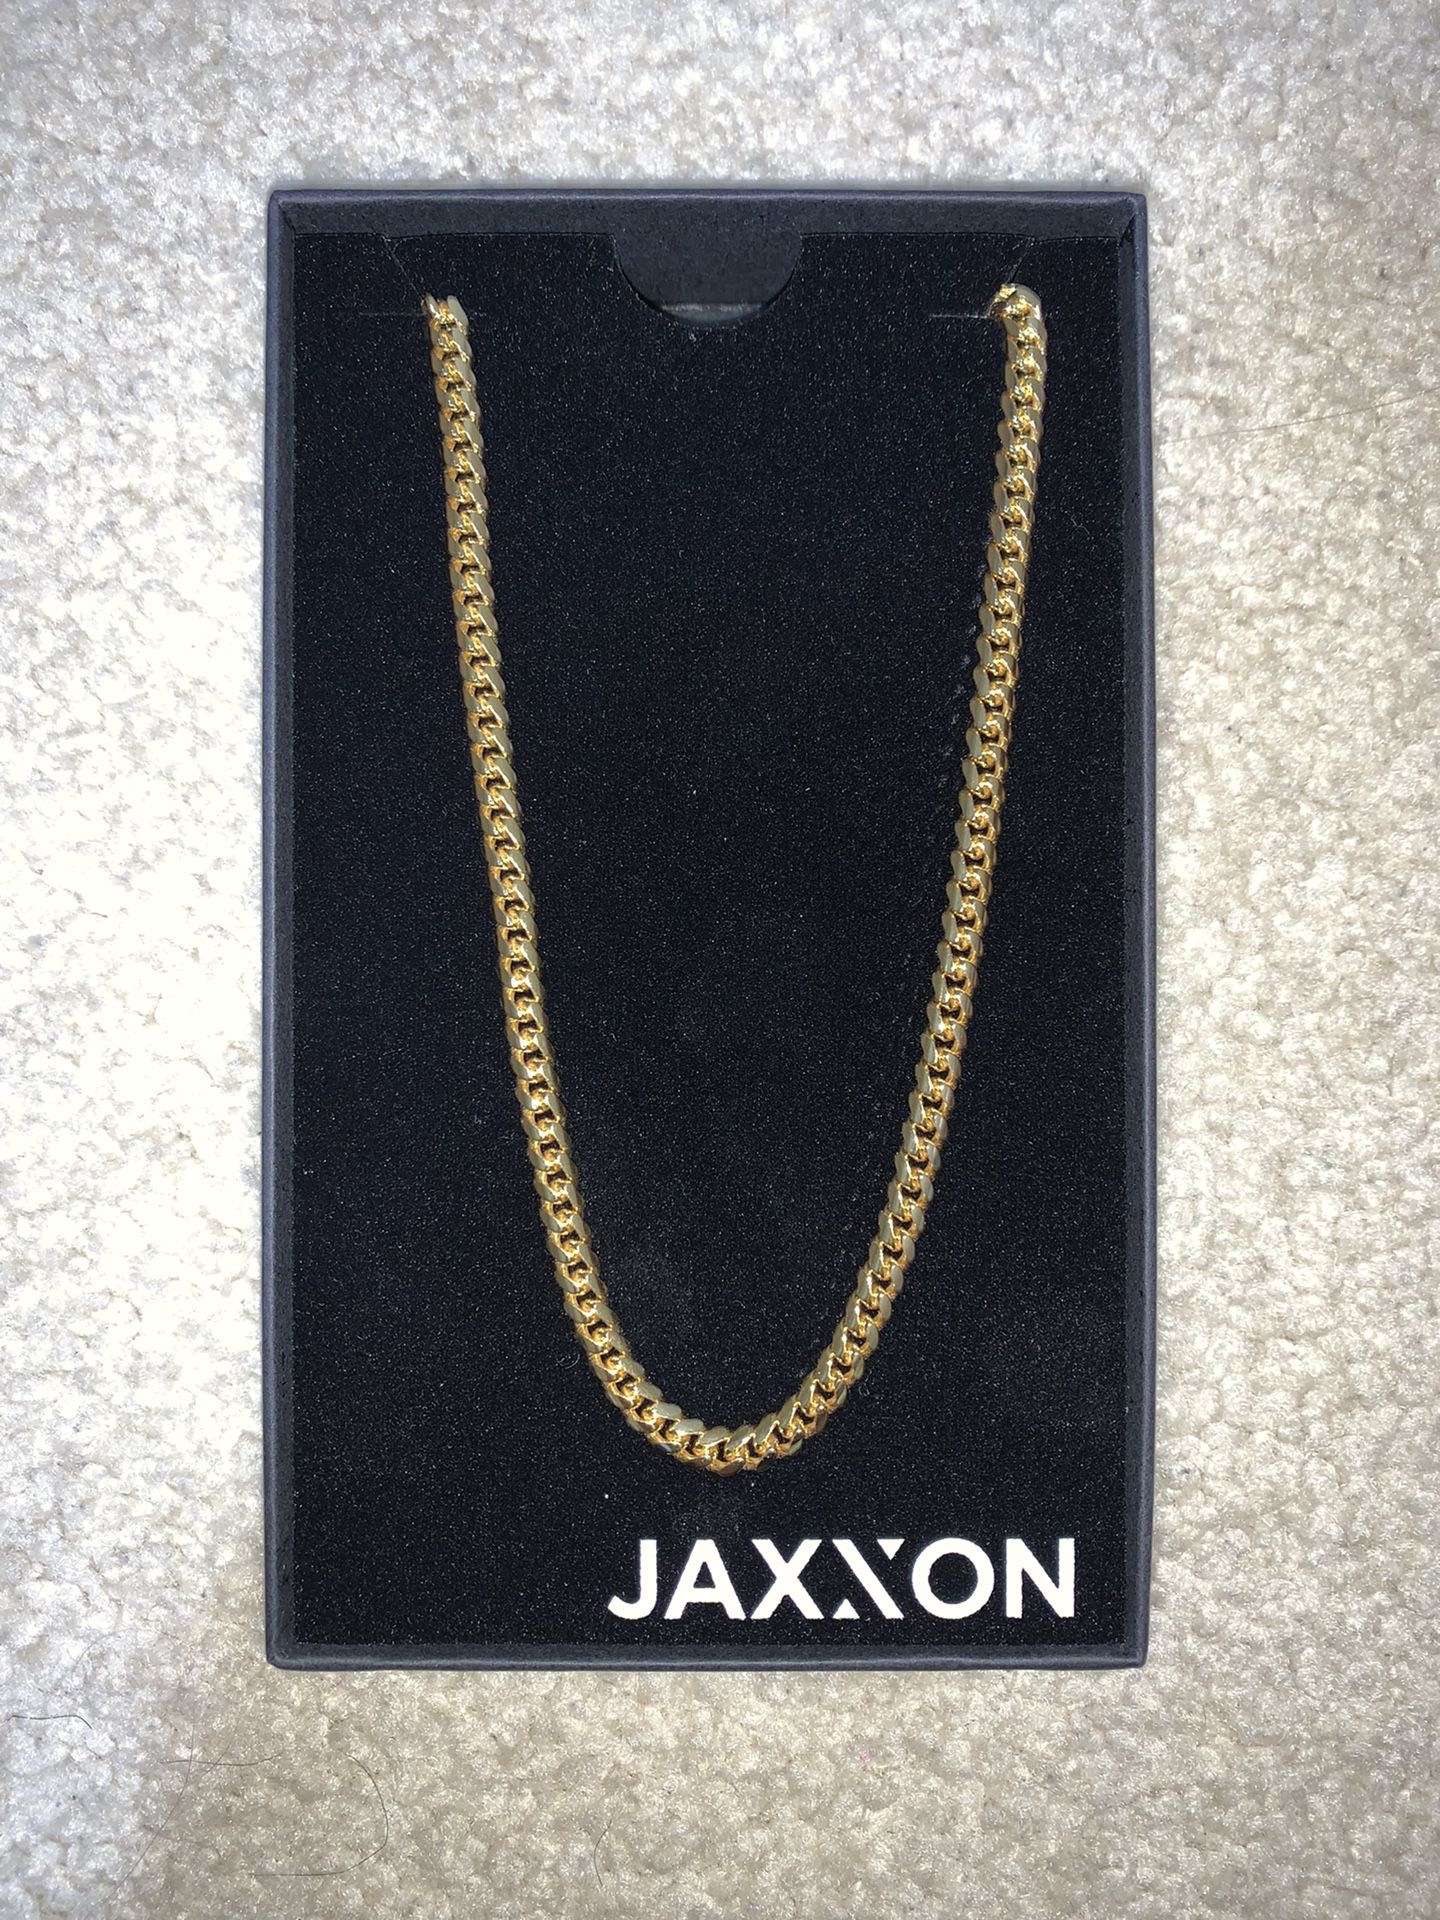 Jaxxon Cuban Link Chain 5mm 22 Inch BRAND NEW 